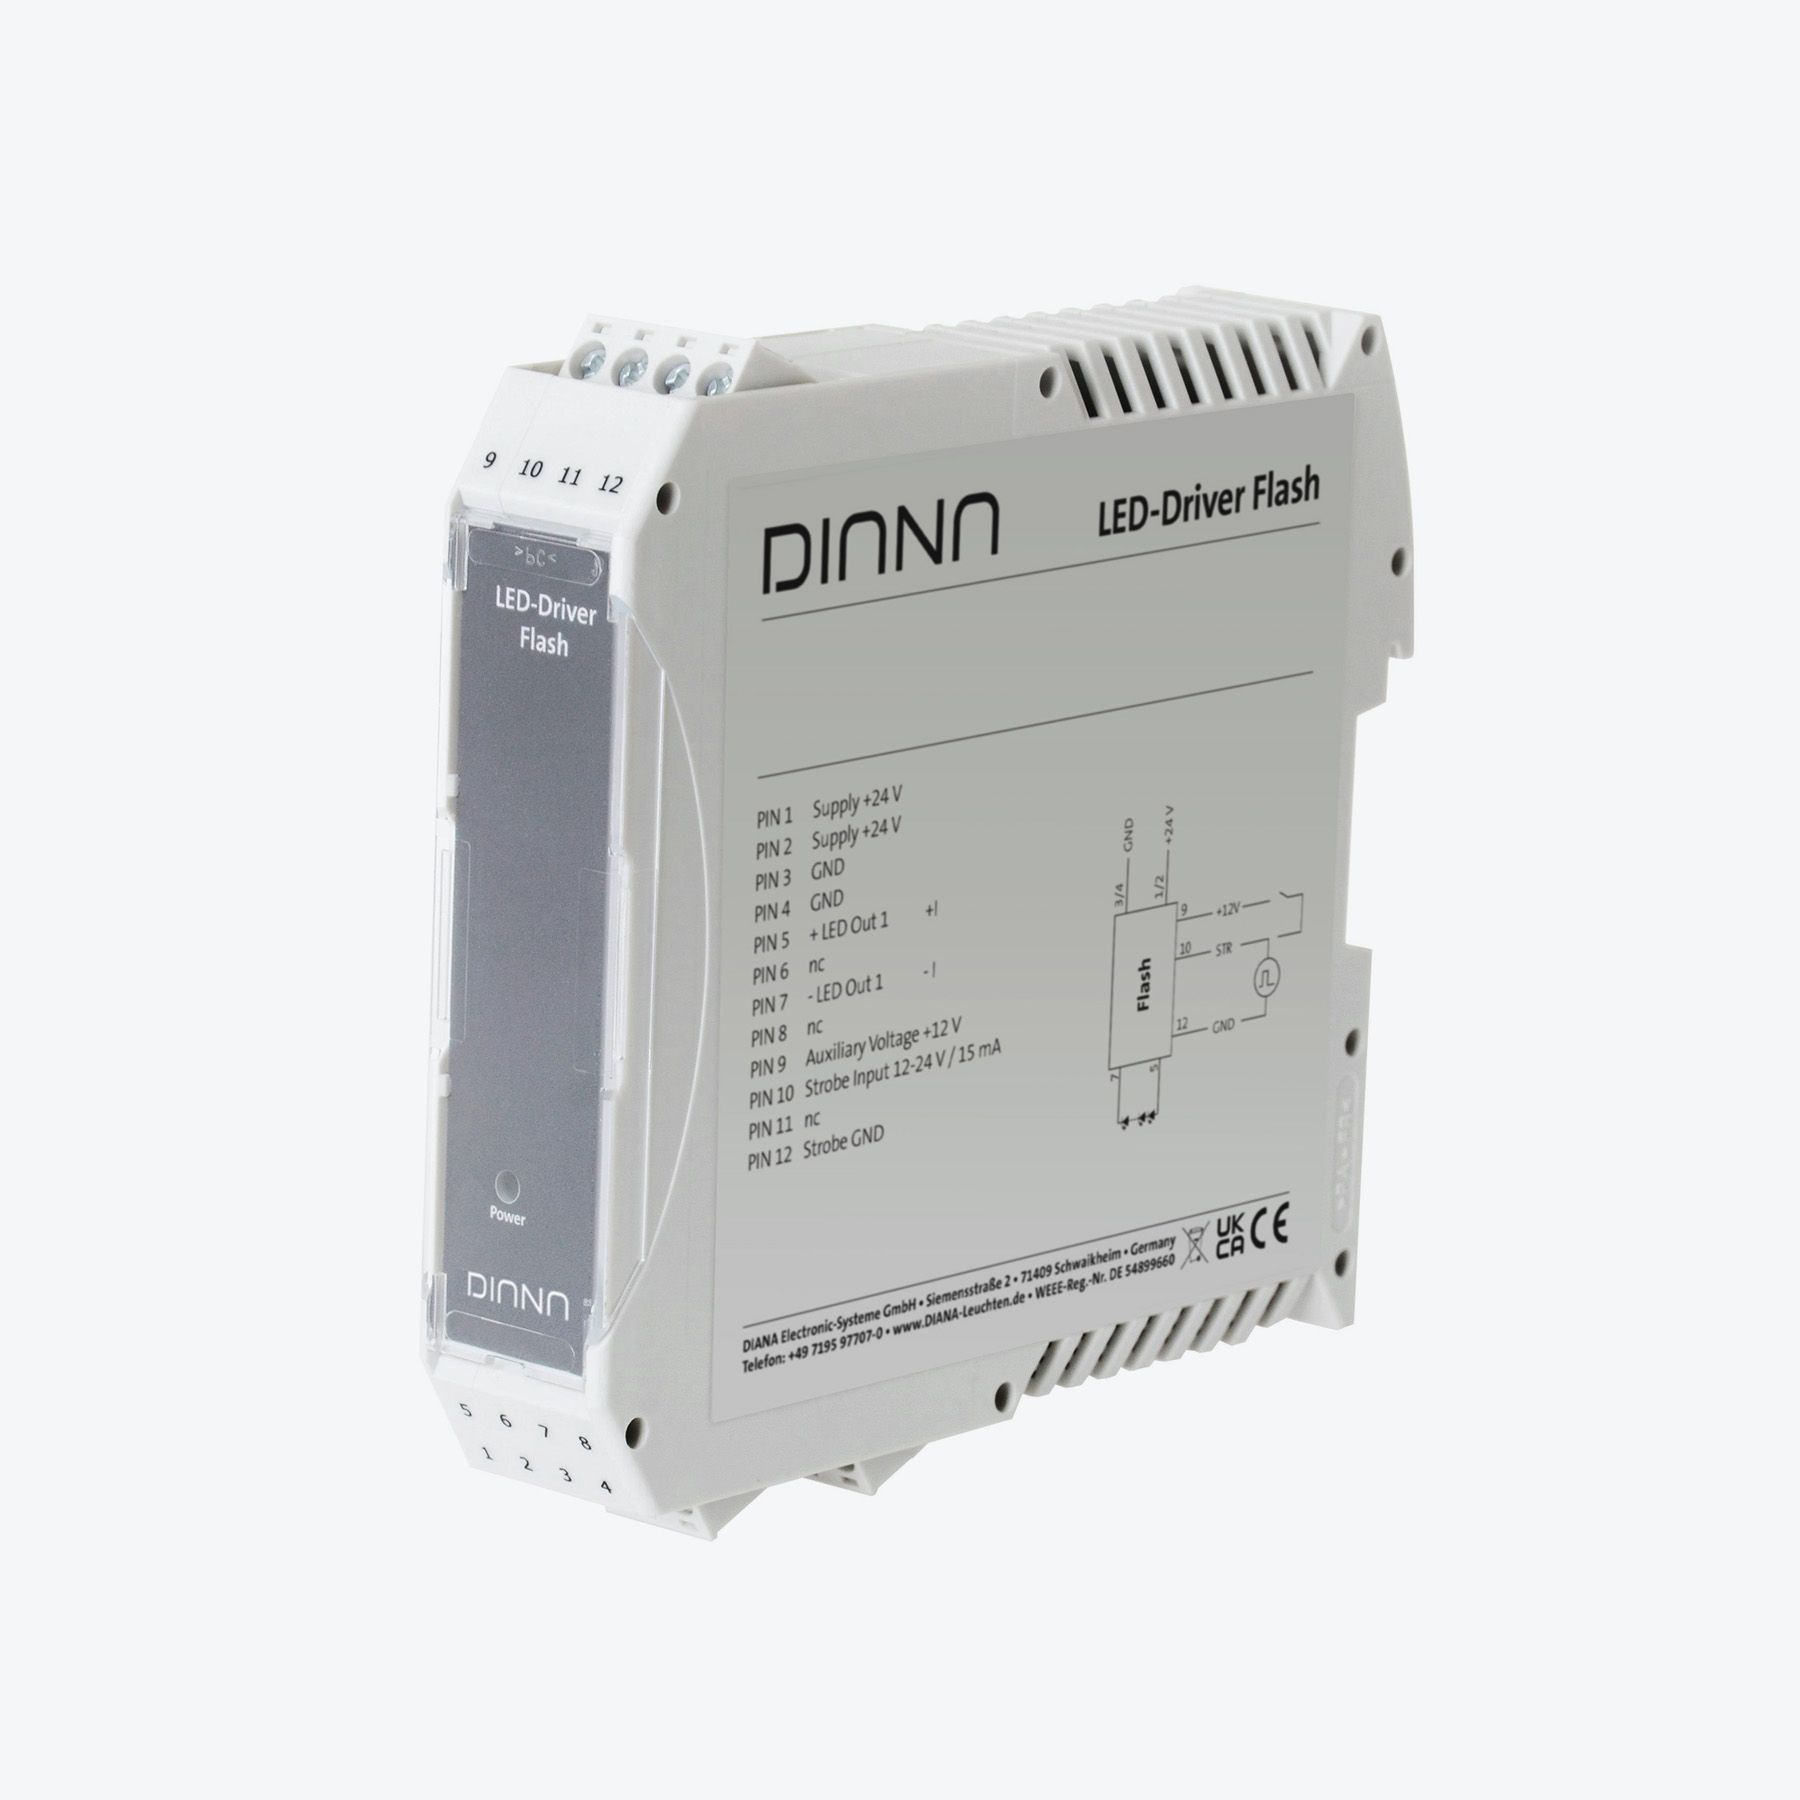 DIANA – Driver units current LED driver FLASH